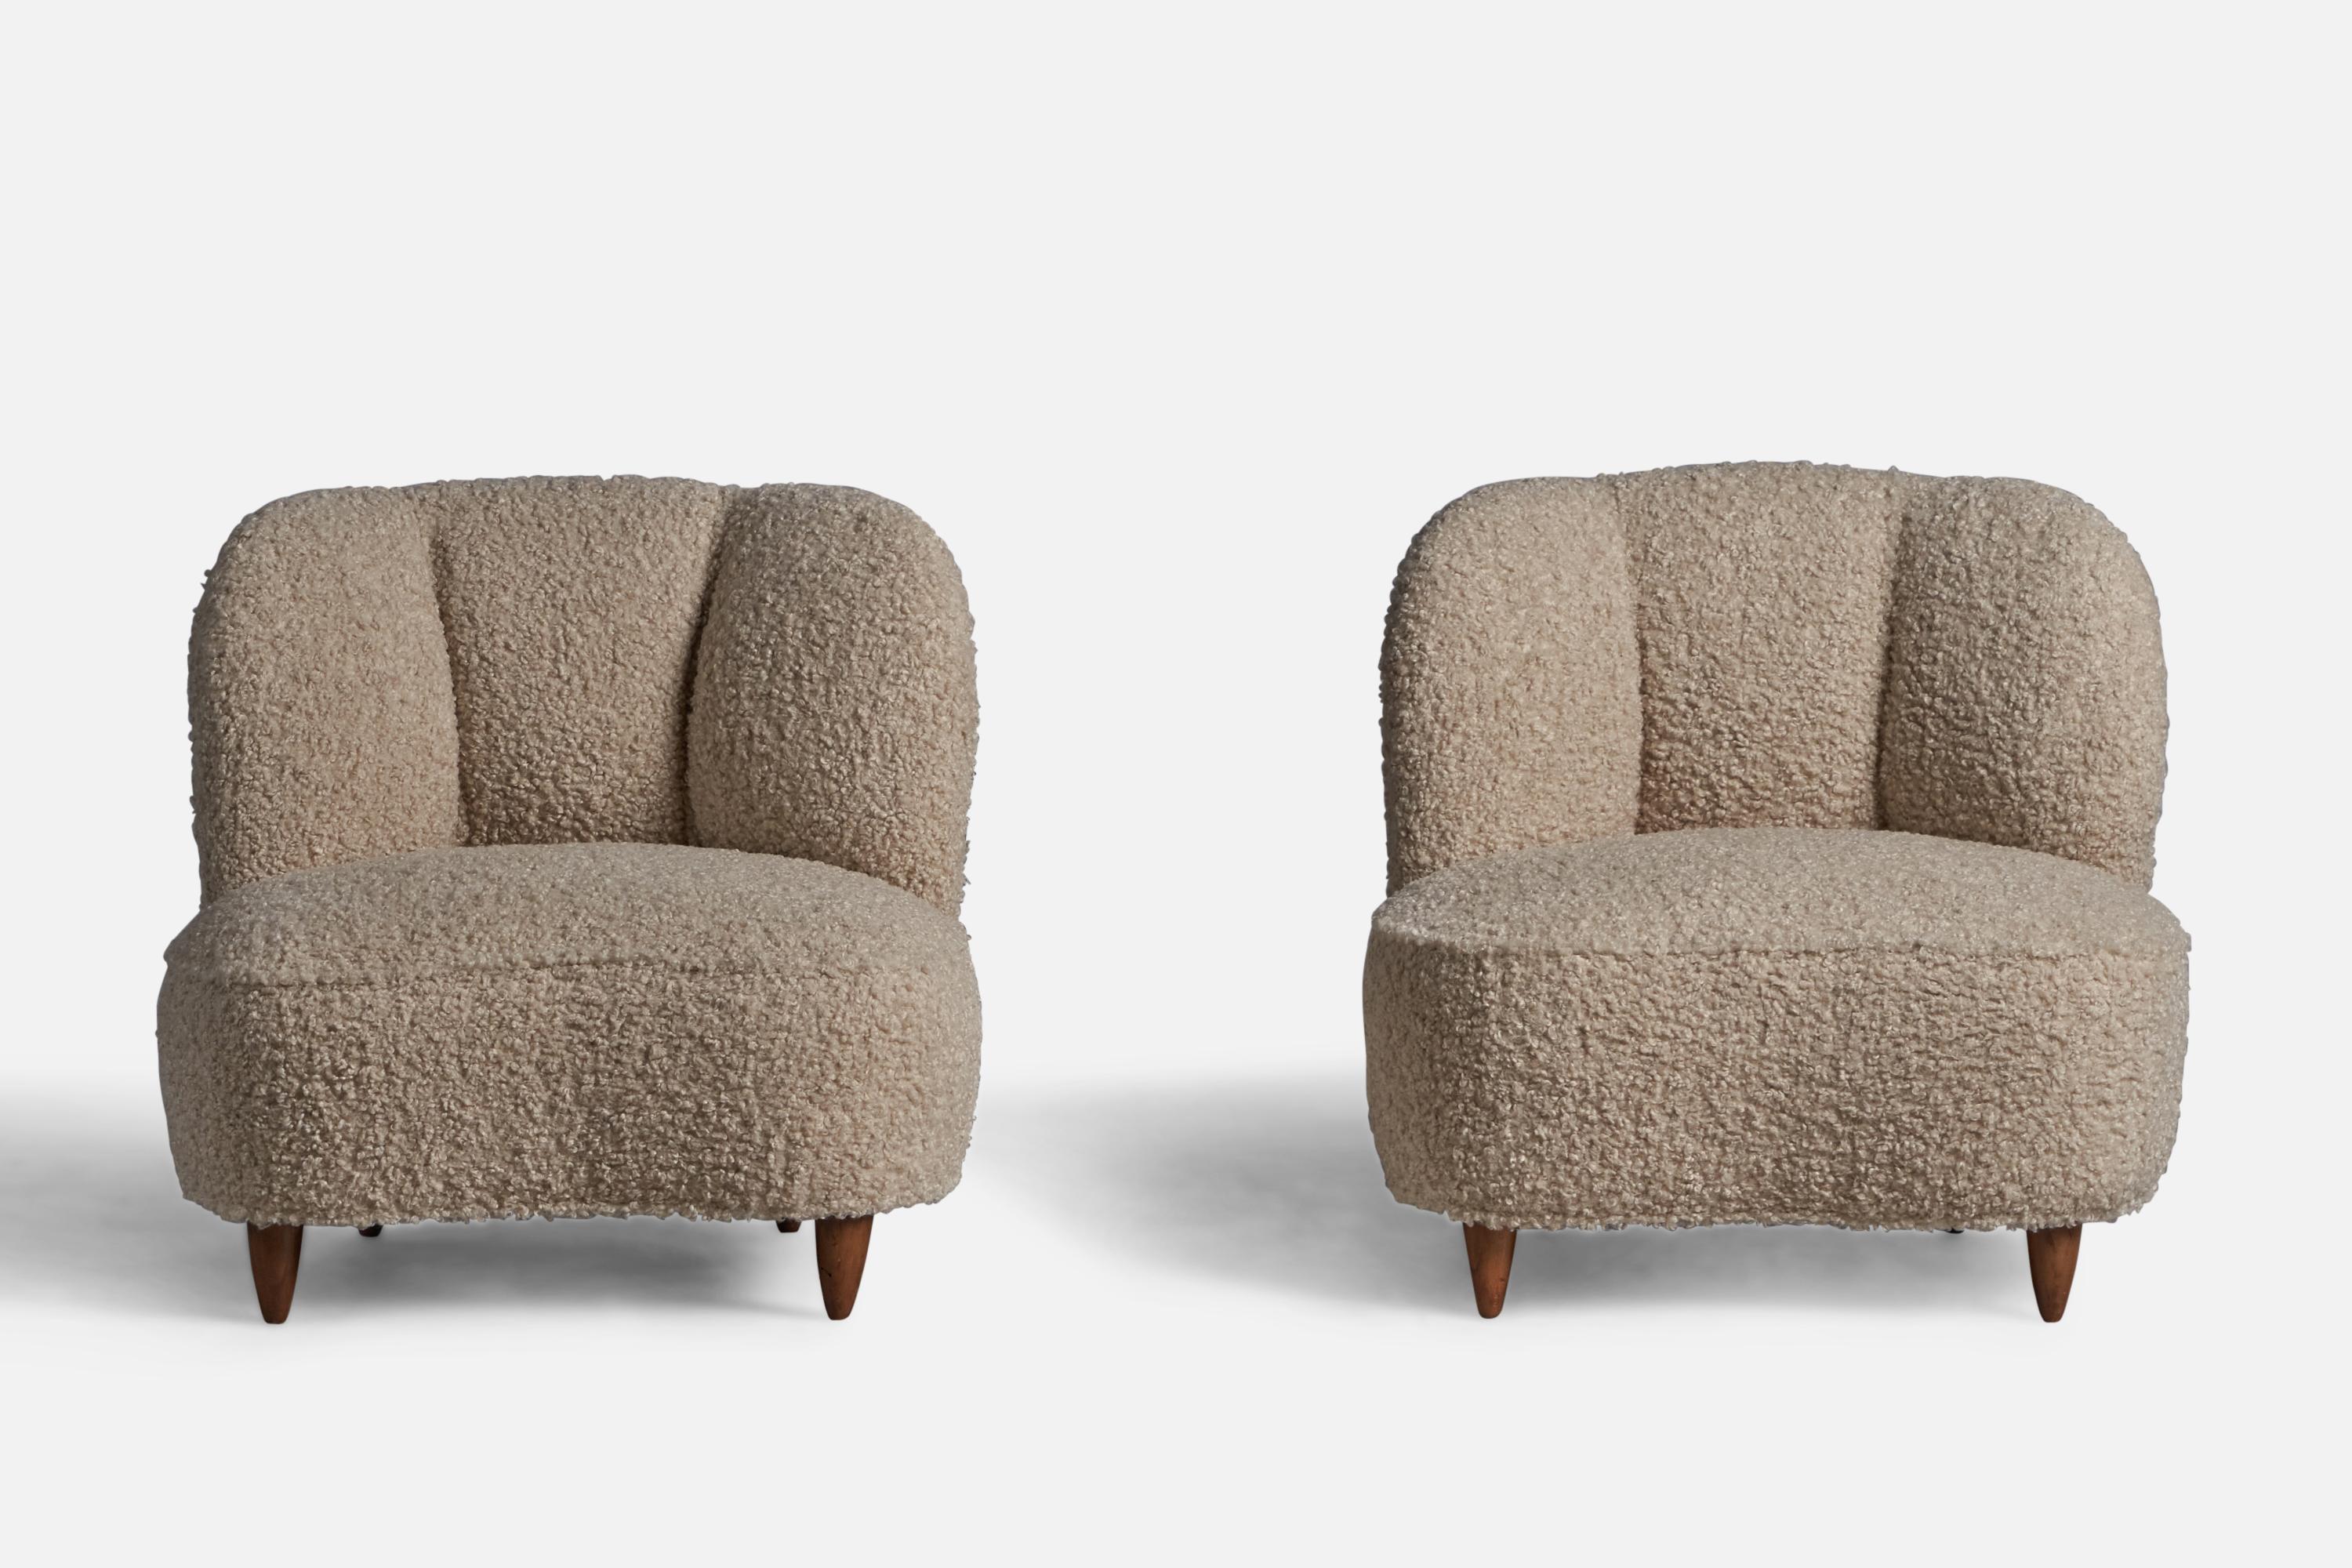 Organic Modern Gio Ponti Attribution, Small Slipper Chairs, Fabric, Walnut, Italy, 1940s